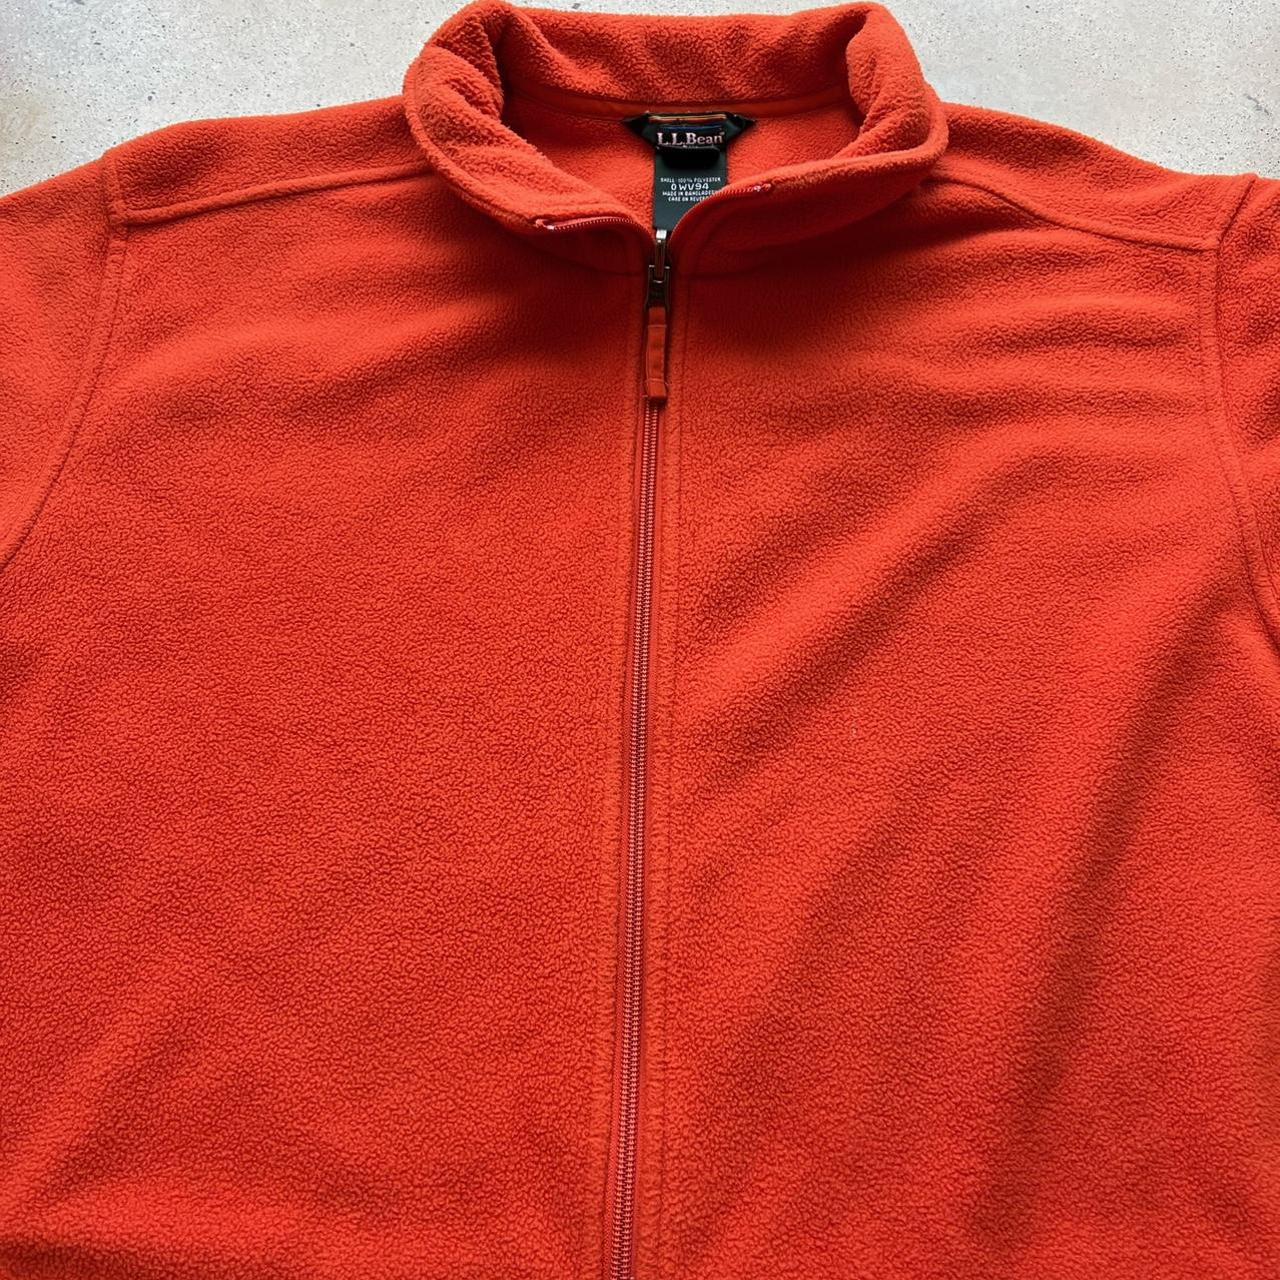 L.L.Bean Men's Orange Jacket (2)